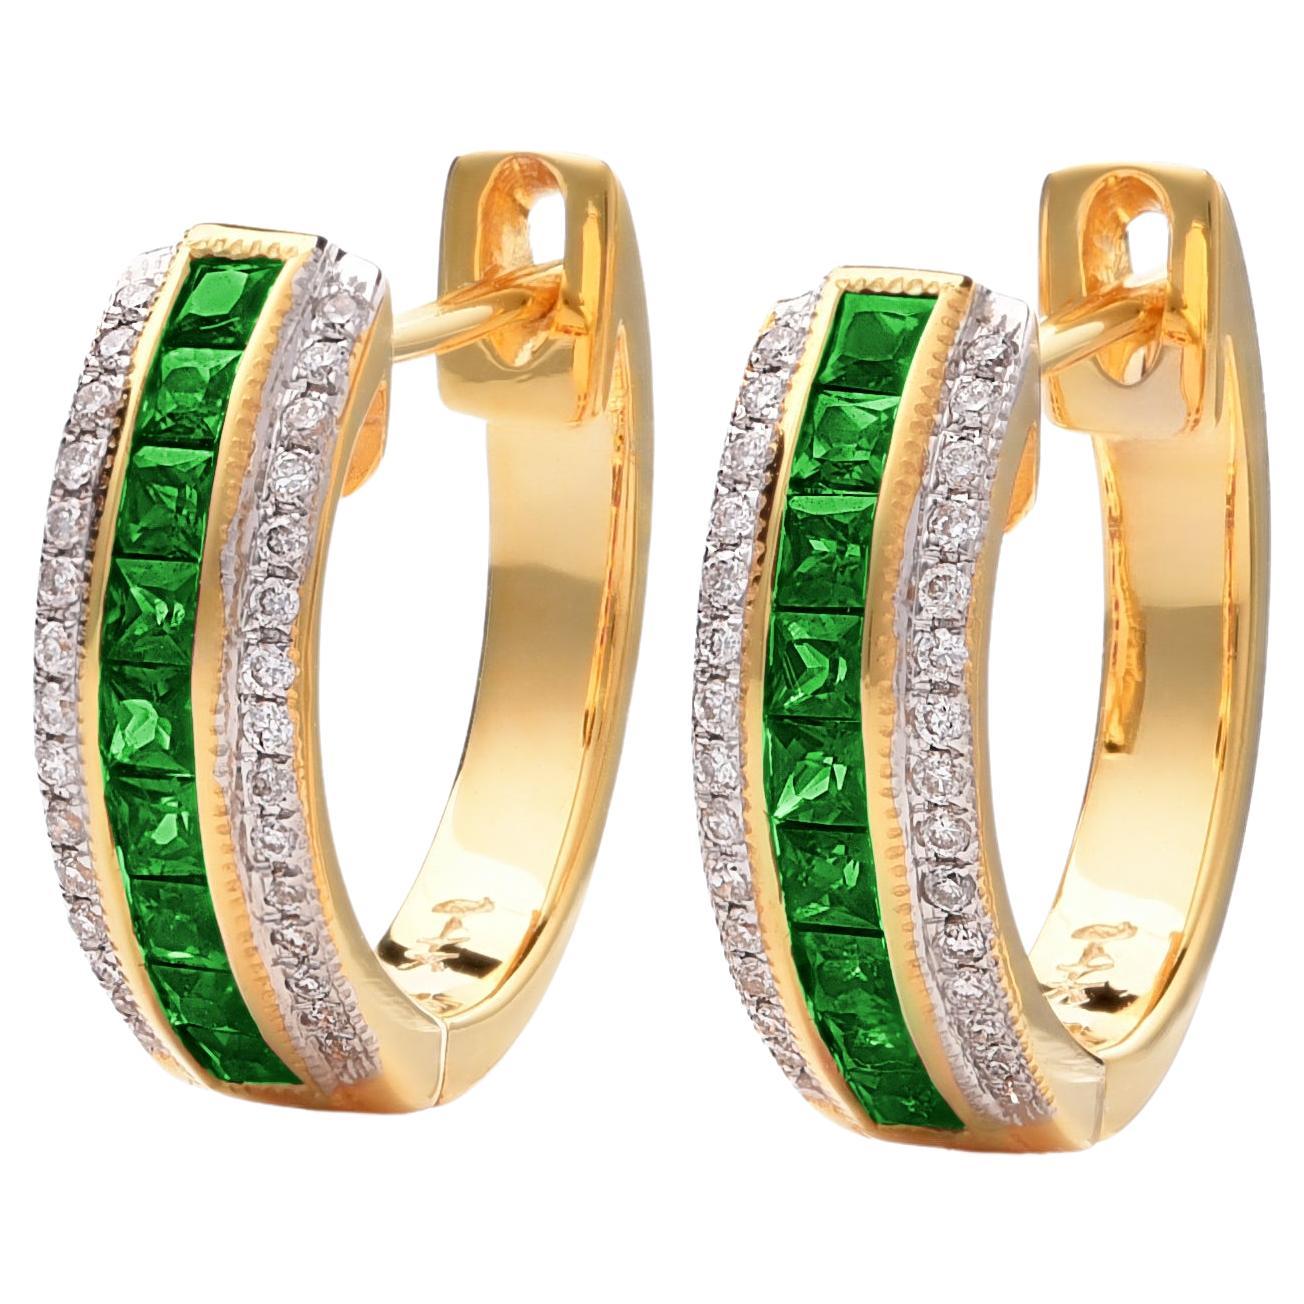 0.58 Carats Tsavorite Diamonds set in 14K Yellow Gold Earrings